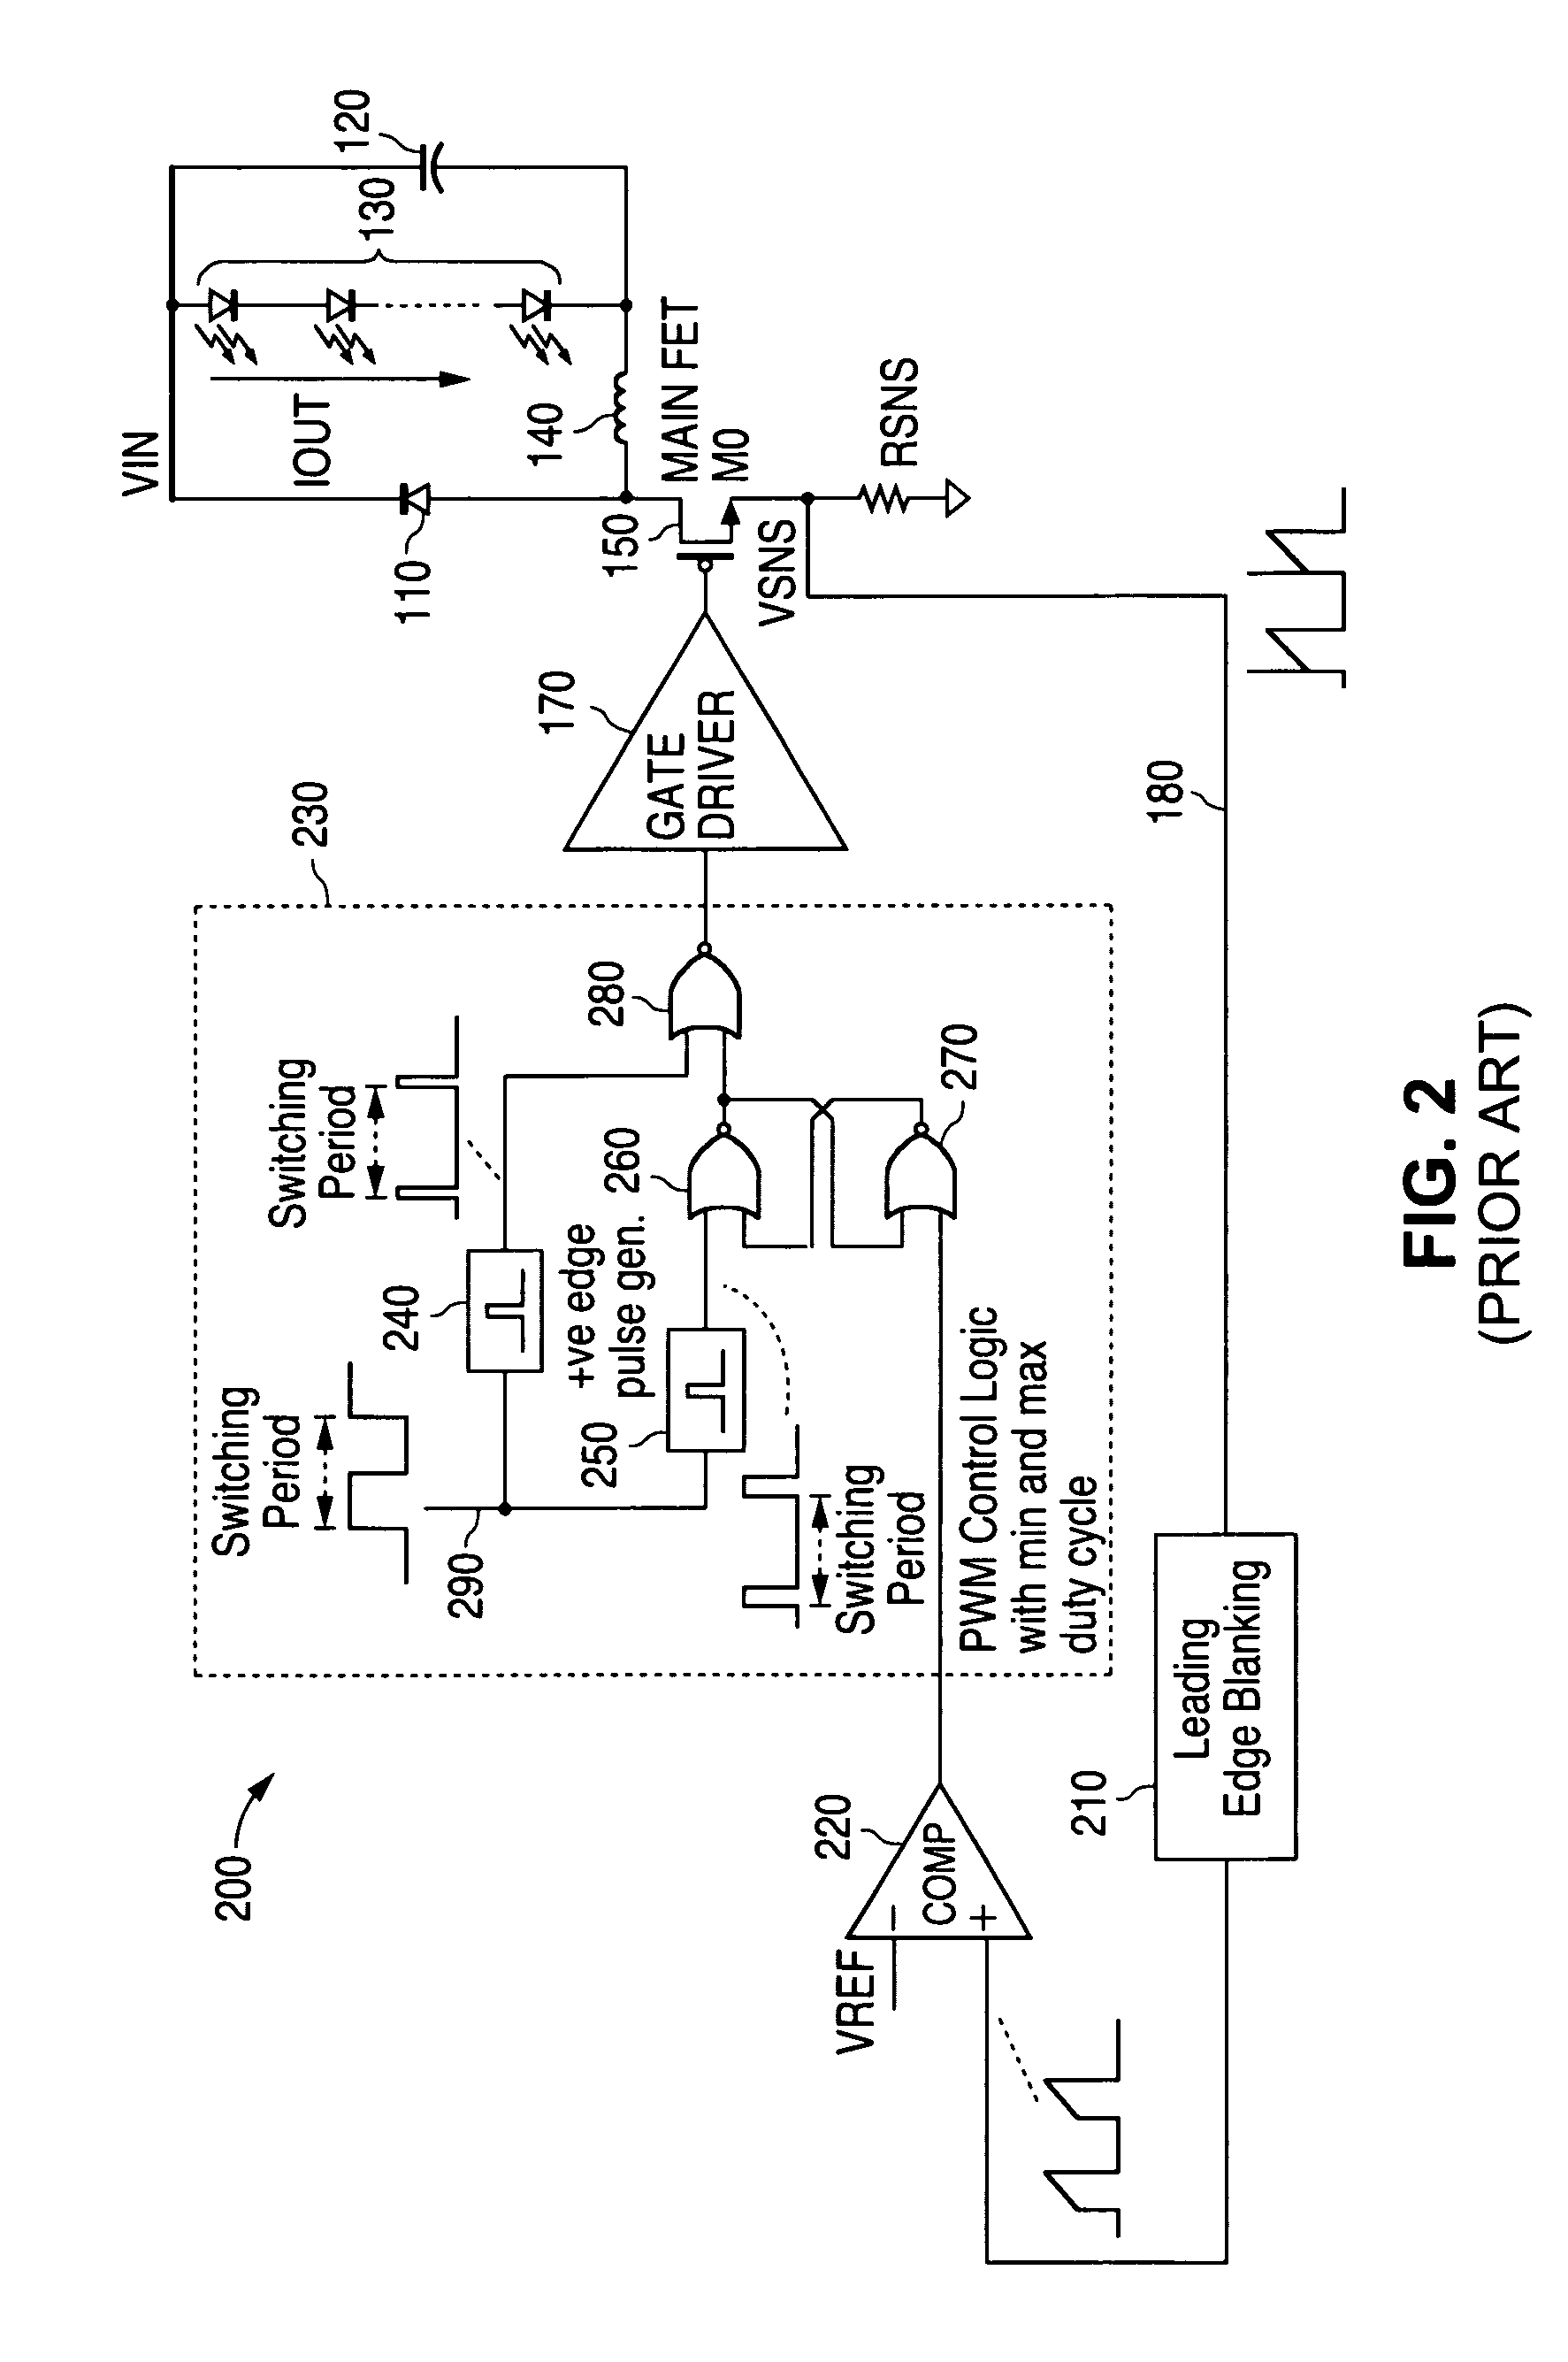 Constant current output using transconductance amplifier